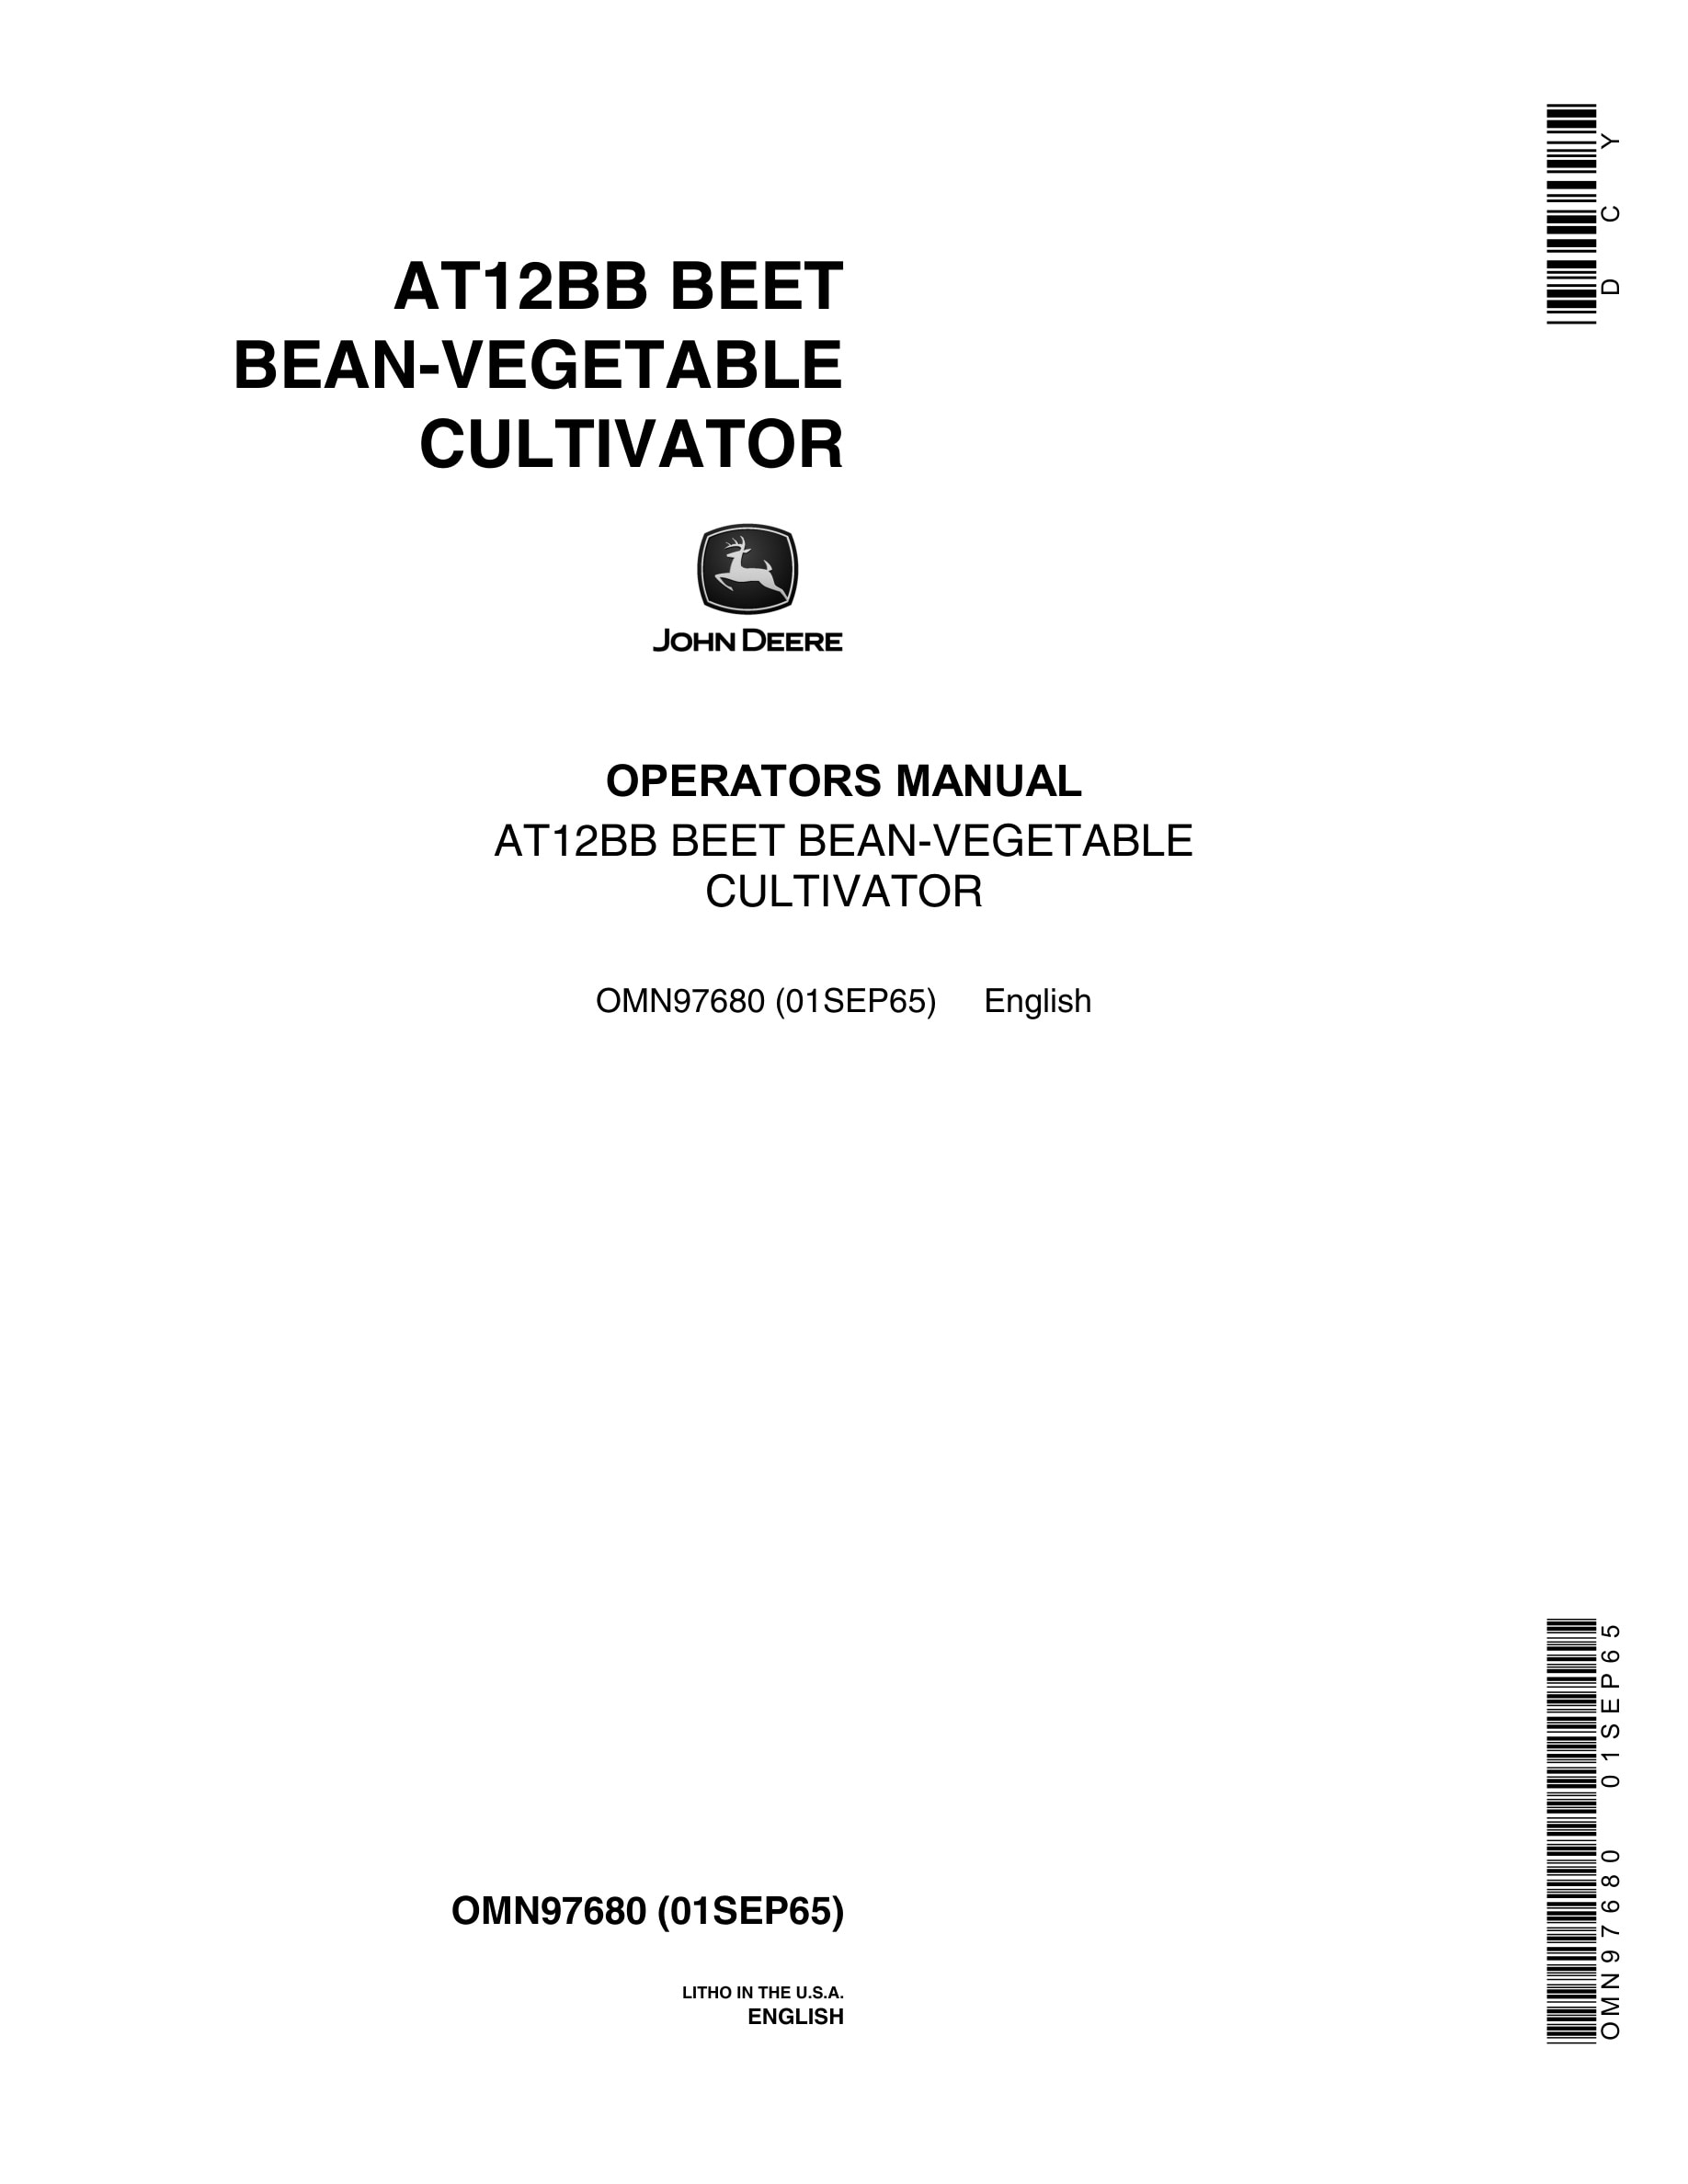 John Deere AT12BB BEET BEAN-VEGETABLE CULTIVATOR Operator Manual OMN97680-1